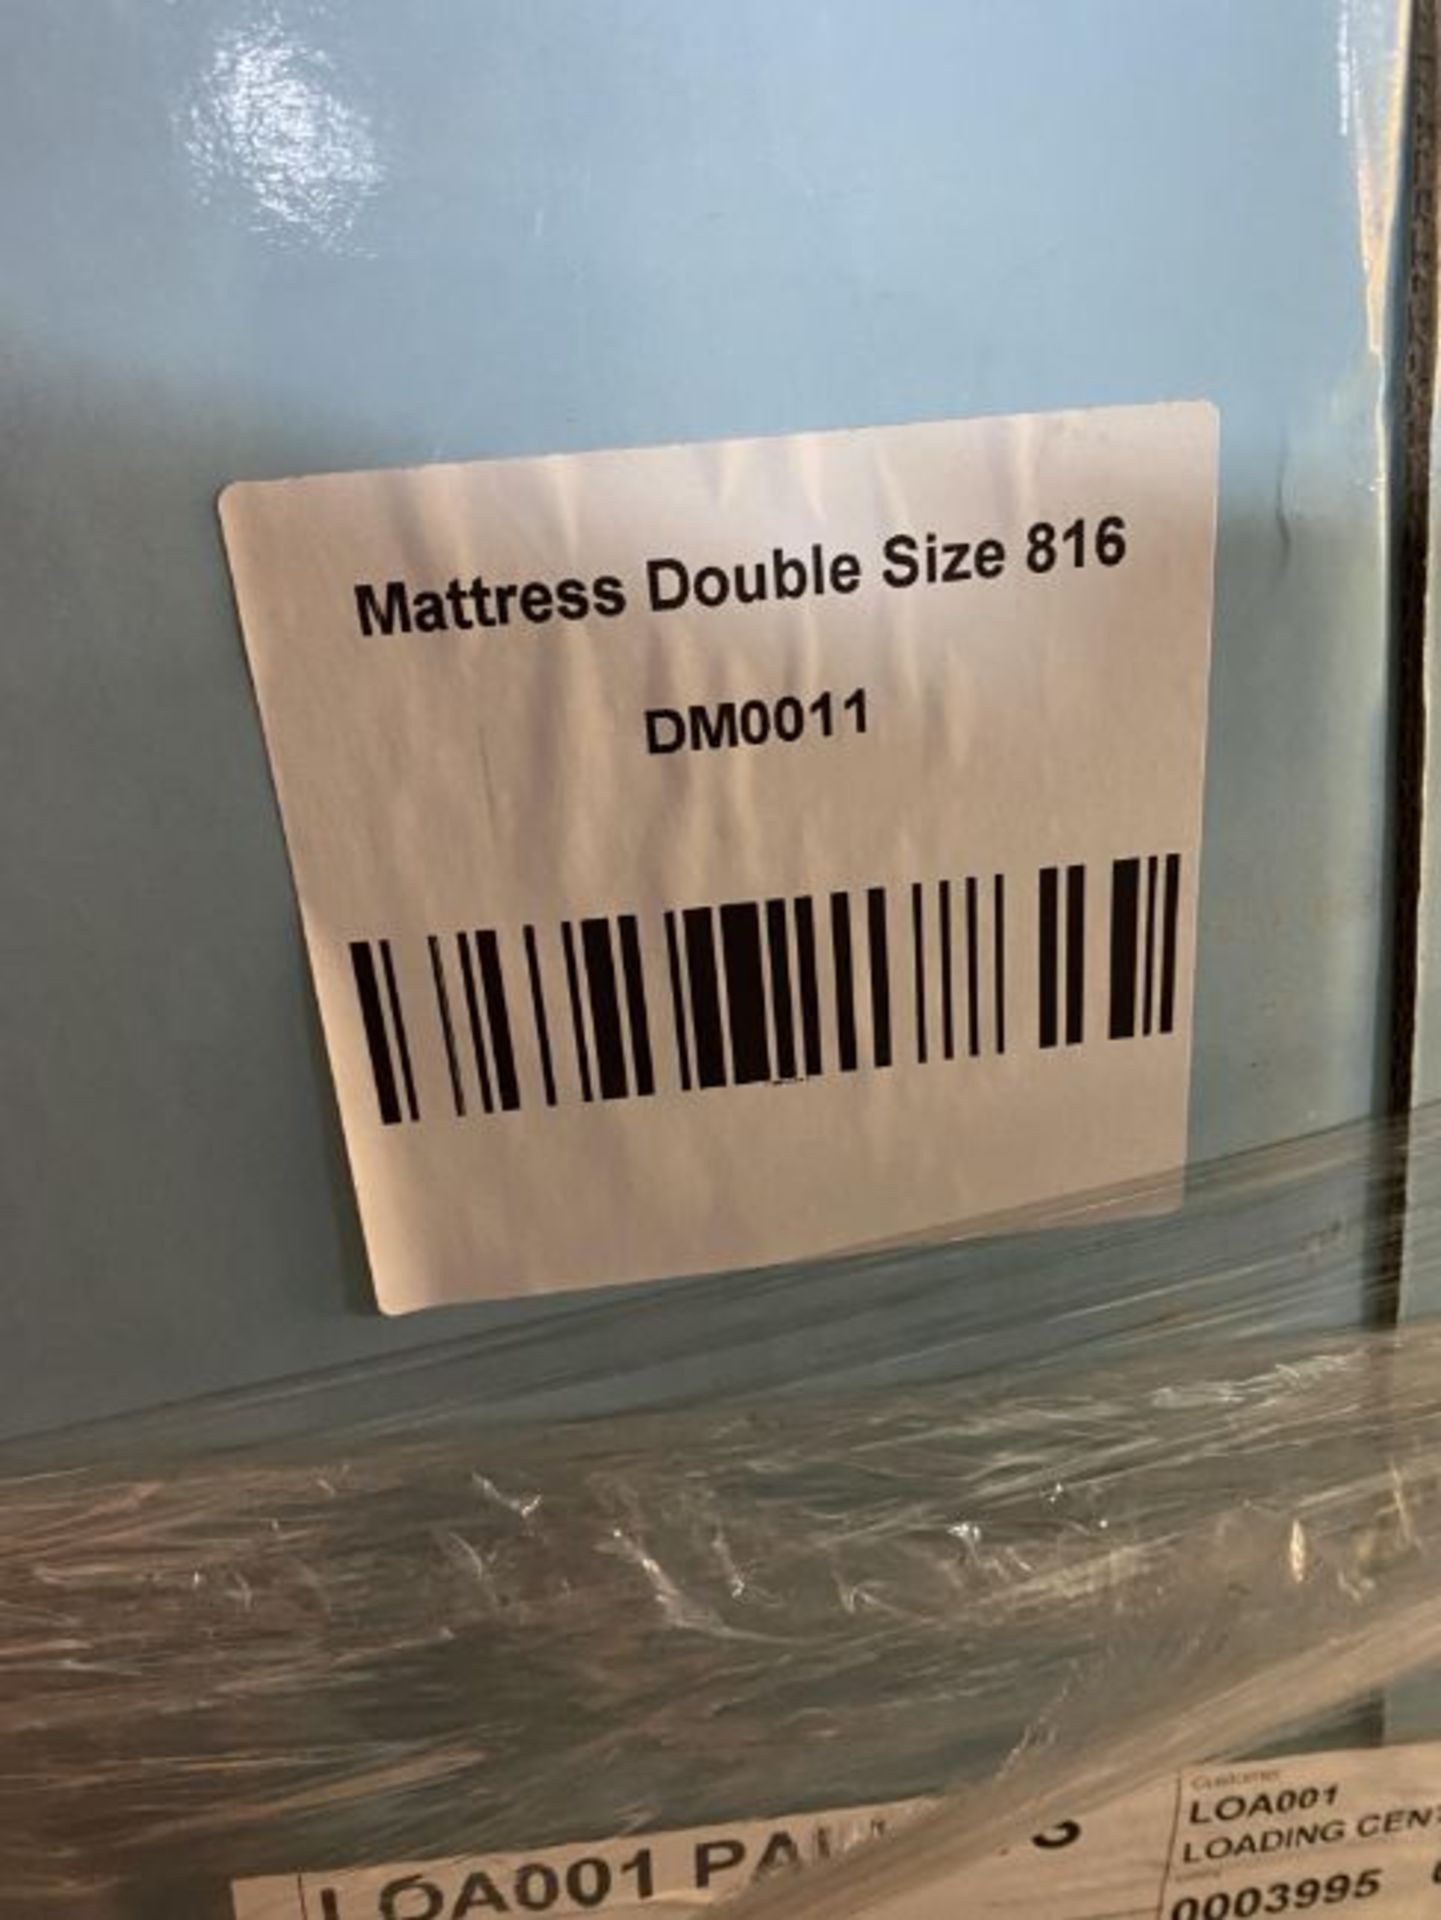 ComfaSleep DM0013 Double Size 815 Mattress - Image 6 of 6